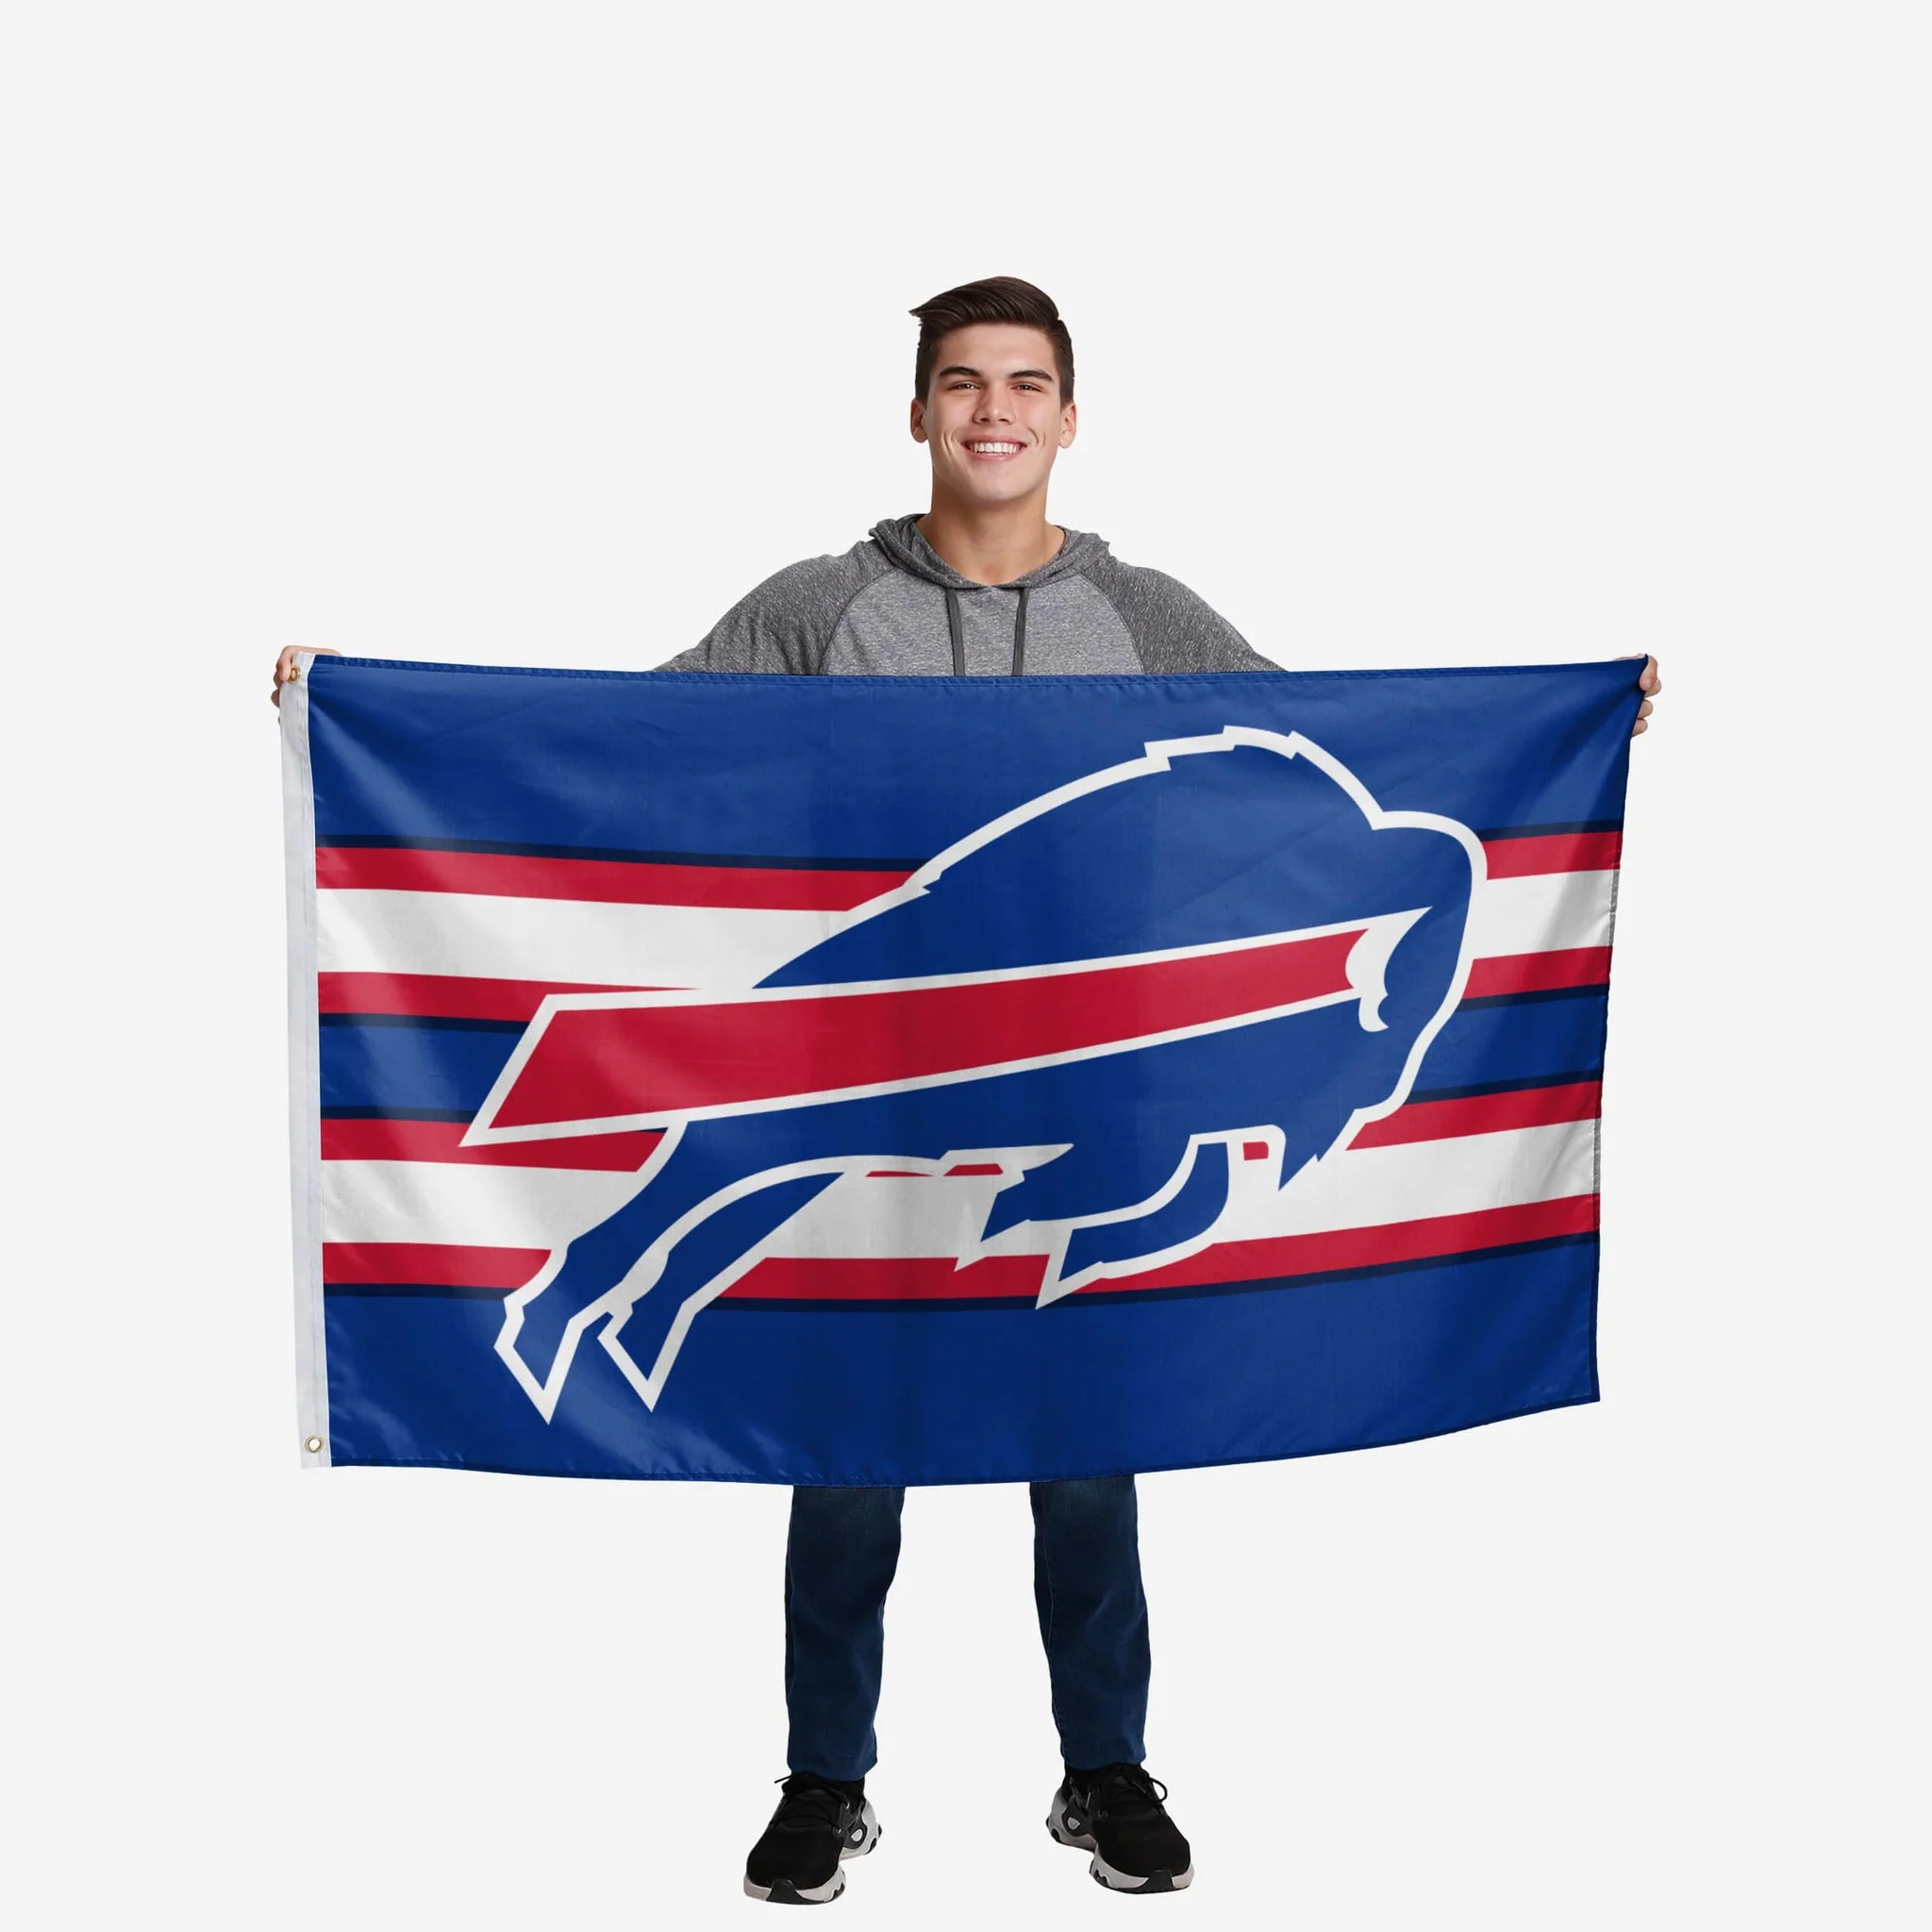 Bills fan holding flag